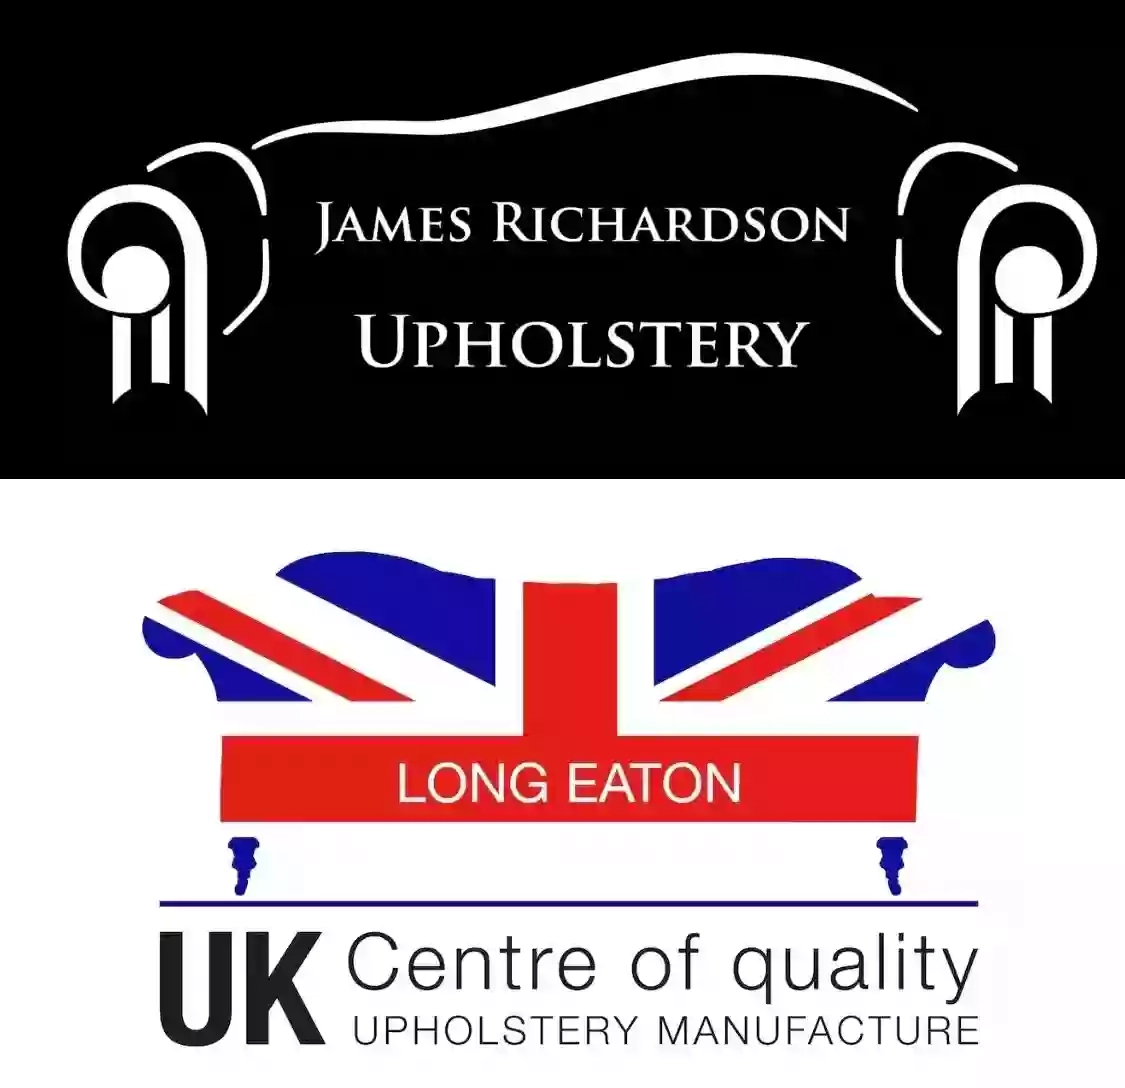 James Richardson Upholstery